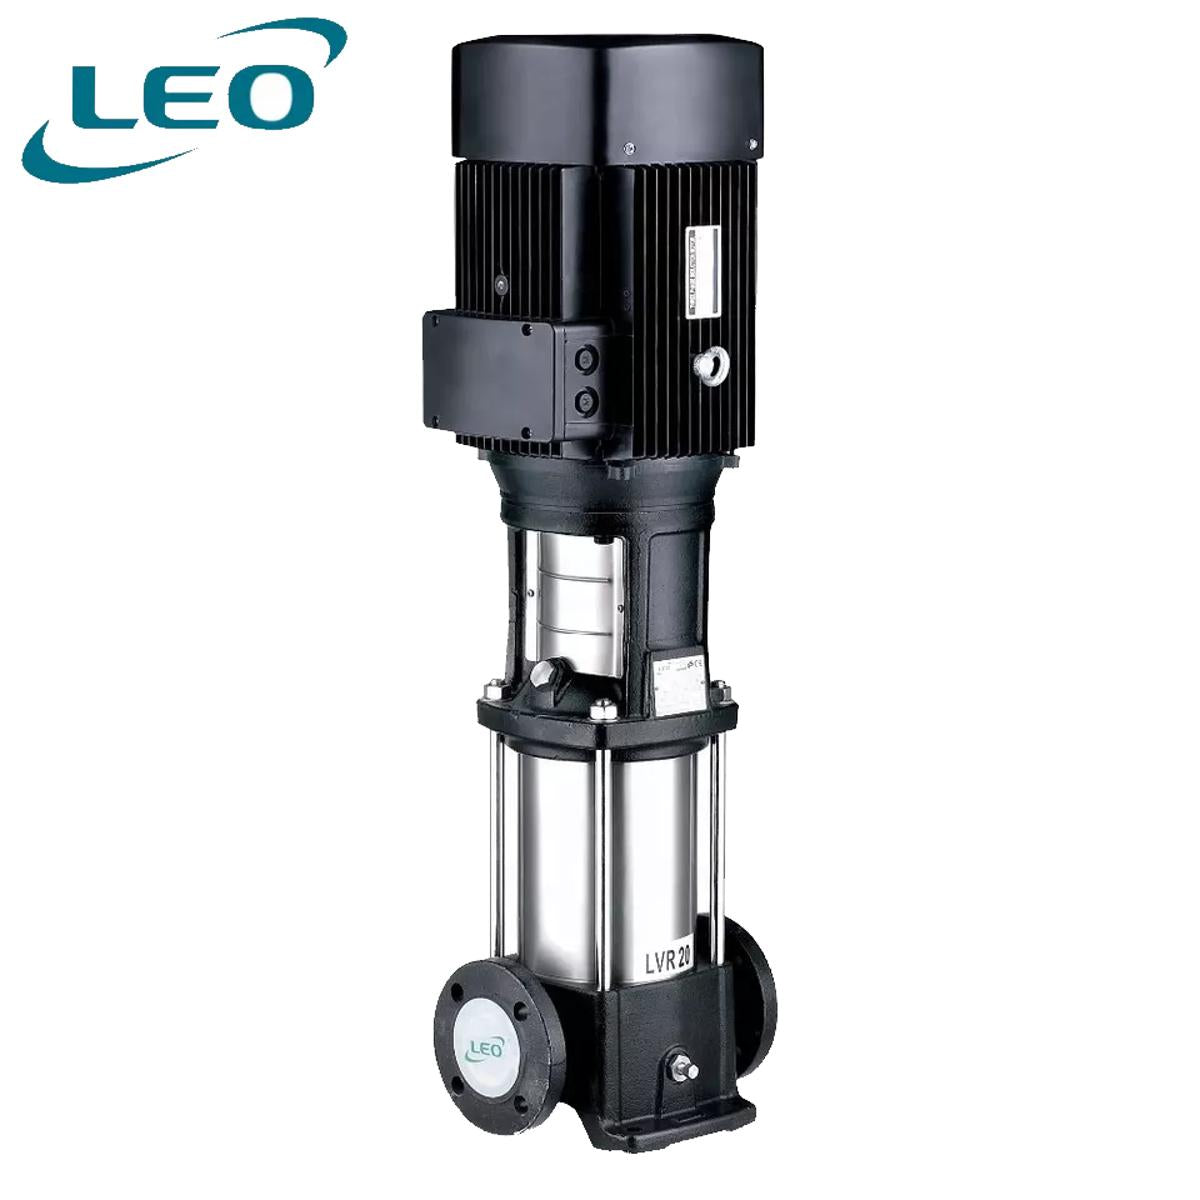 LEO - LVR-4-20 - 4000 W - 5.5 HP (IE2) -  Vertical Multistage Booster  - HIGH PRESSURE Pump - SIZE 1 1-4" X 1 1-4" - THREE PHASE - European STANDARD